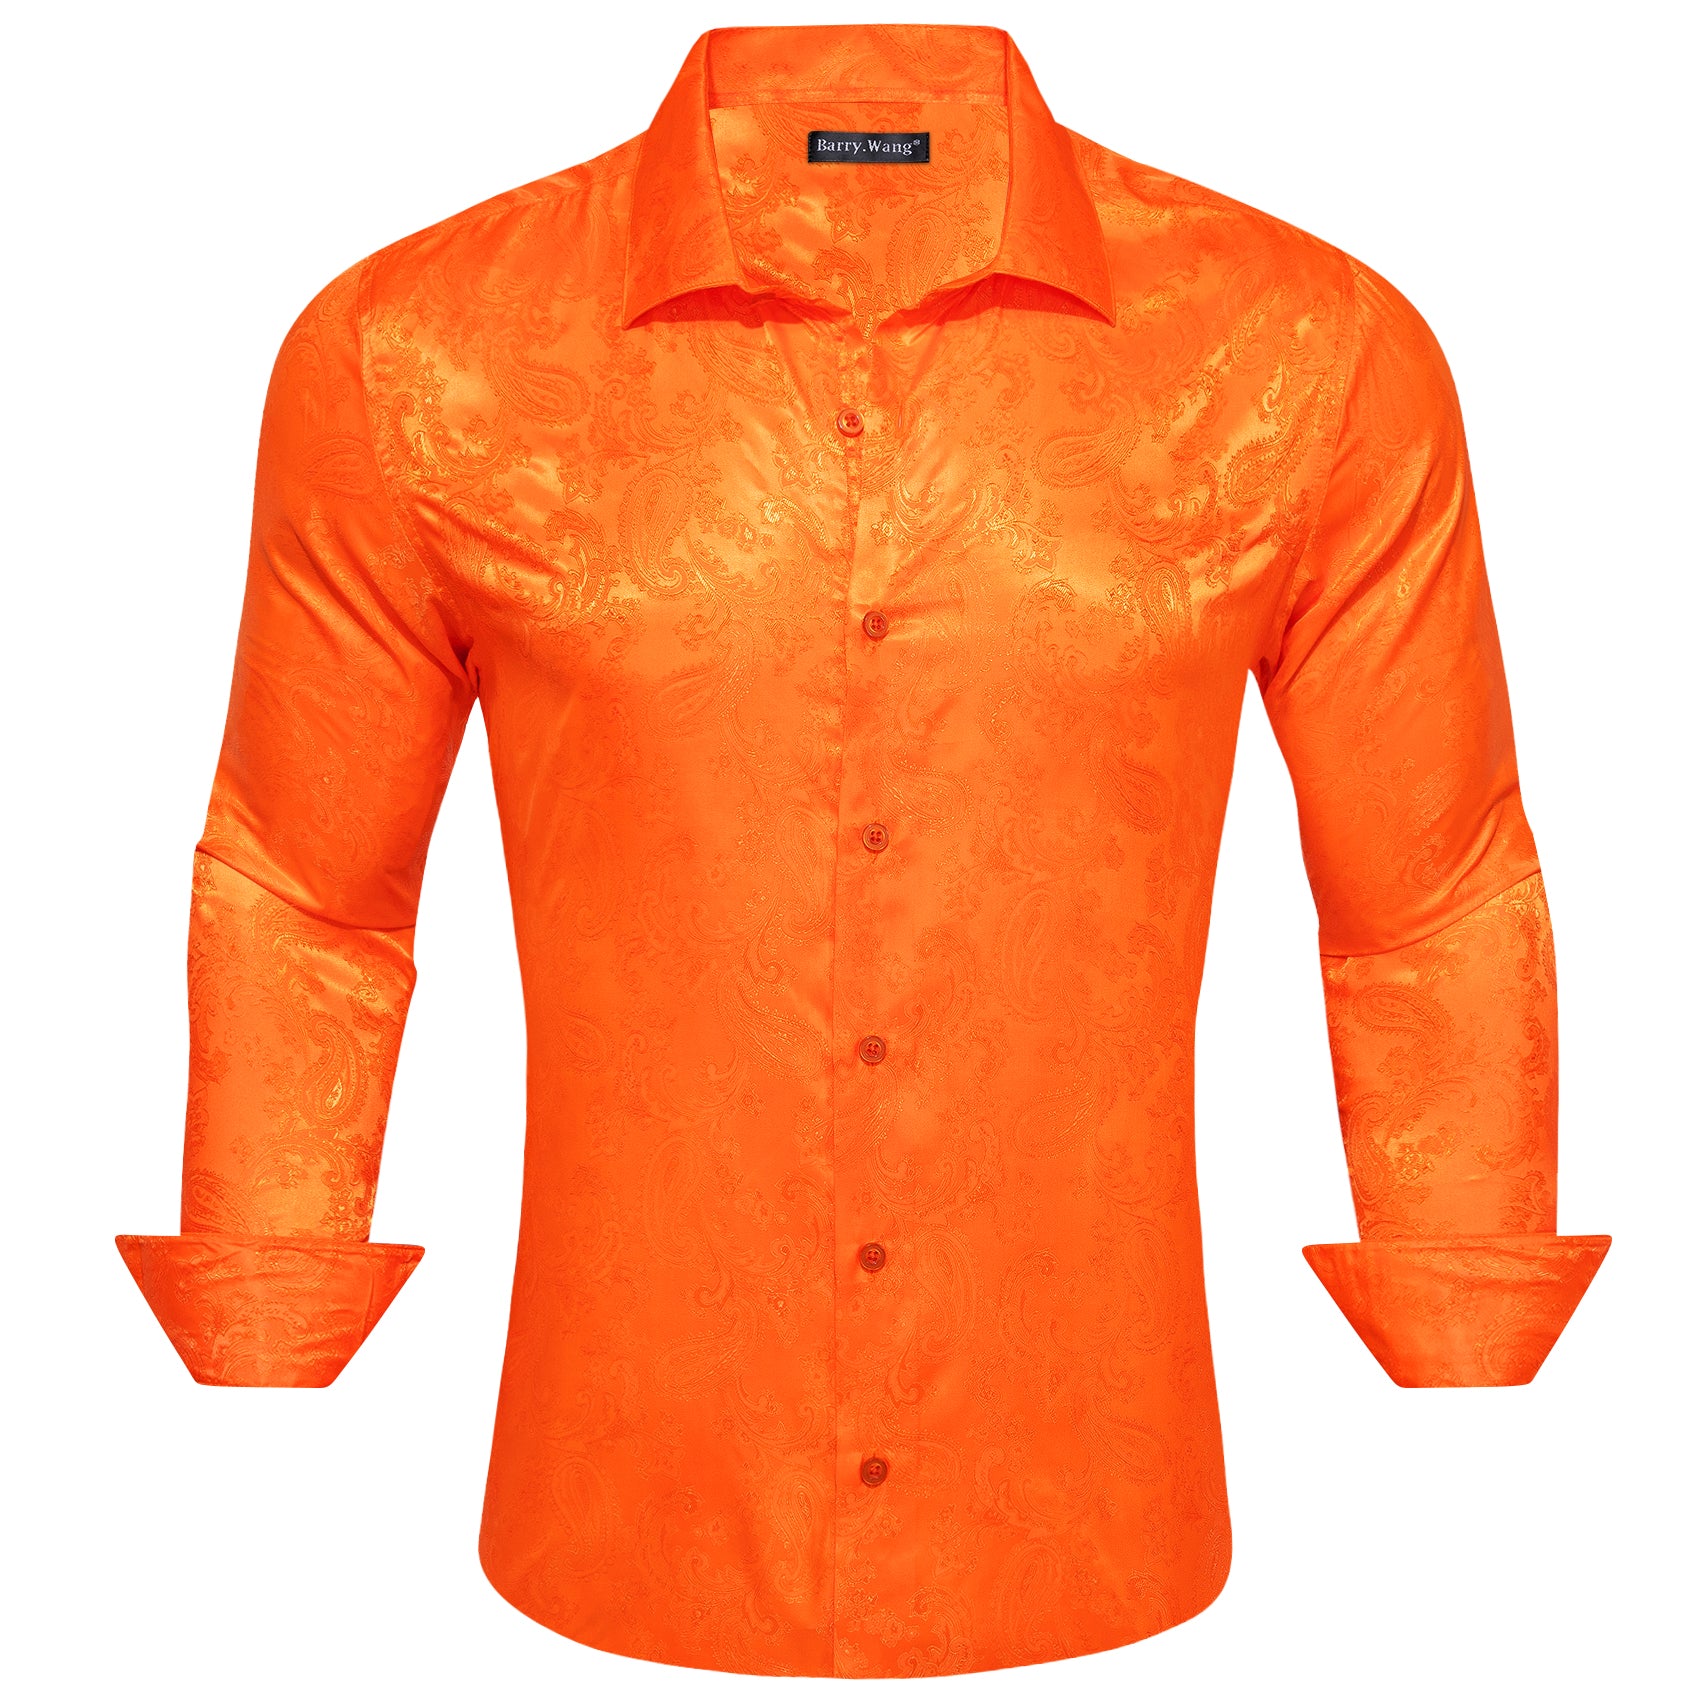 Long t sleeve button up outfit men orange shirt 